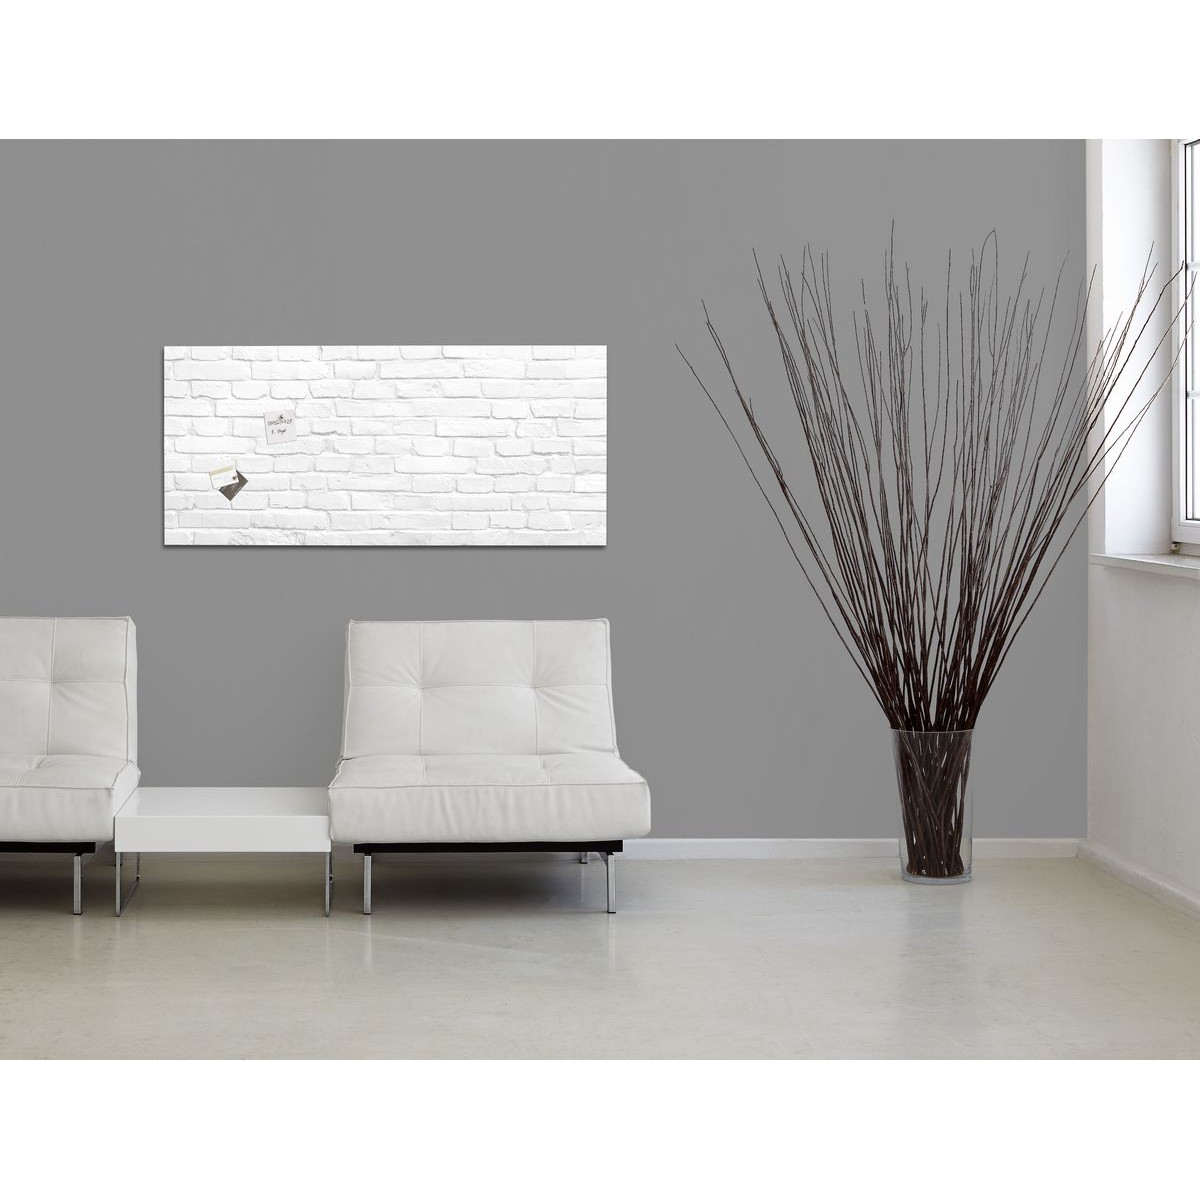 GL144 - Sigel - Magnetic Glass Board - White brick - 91 x 46 cm